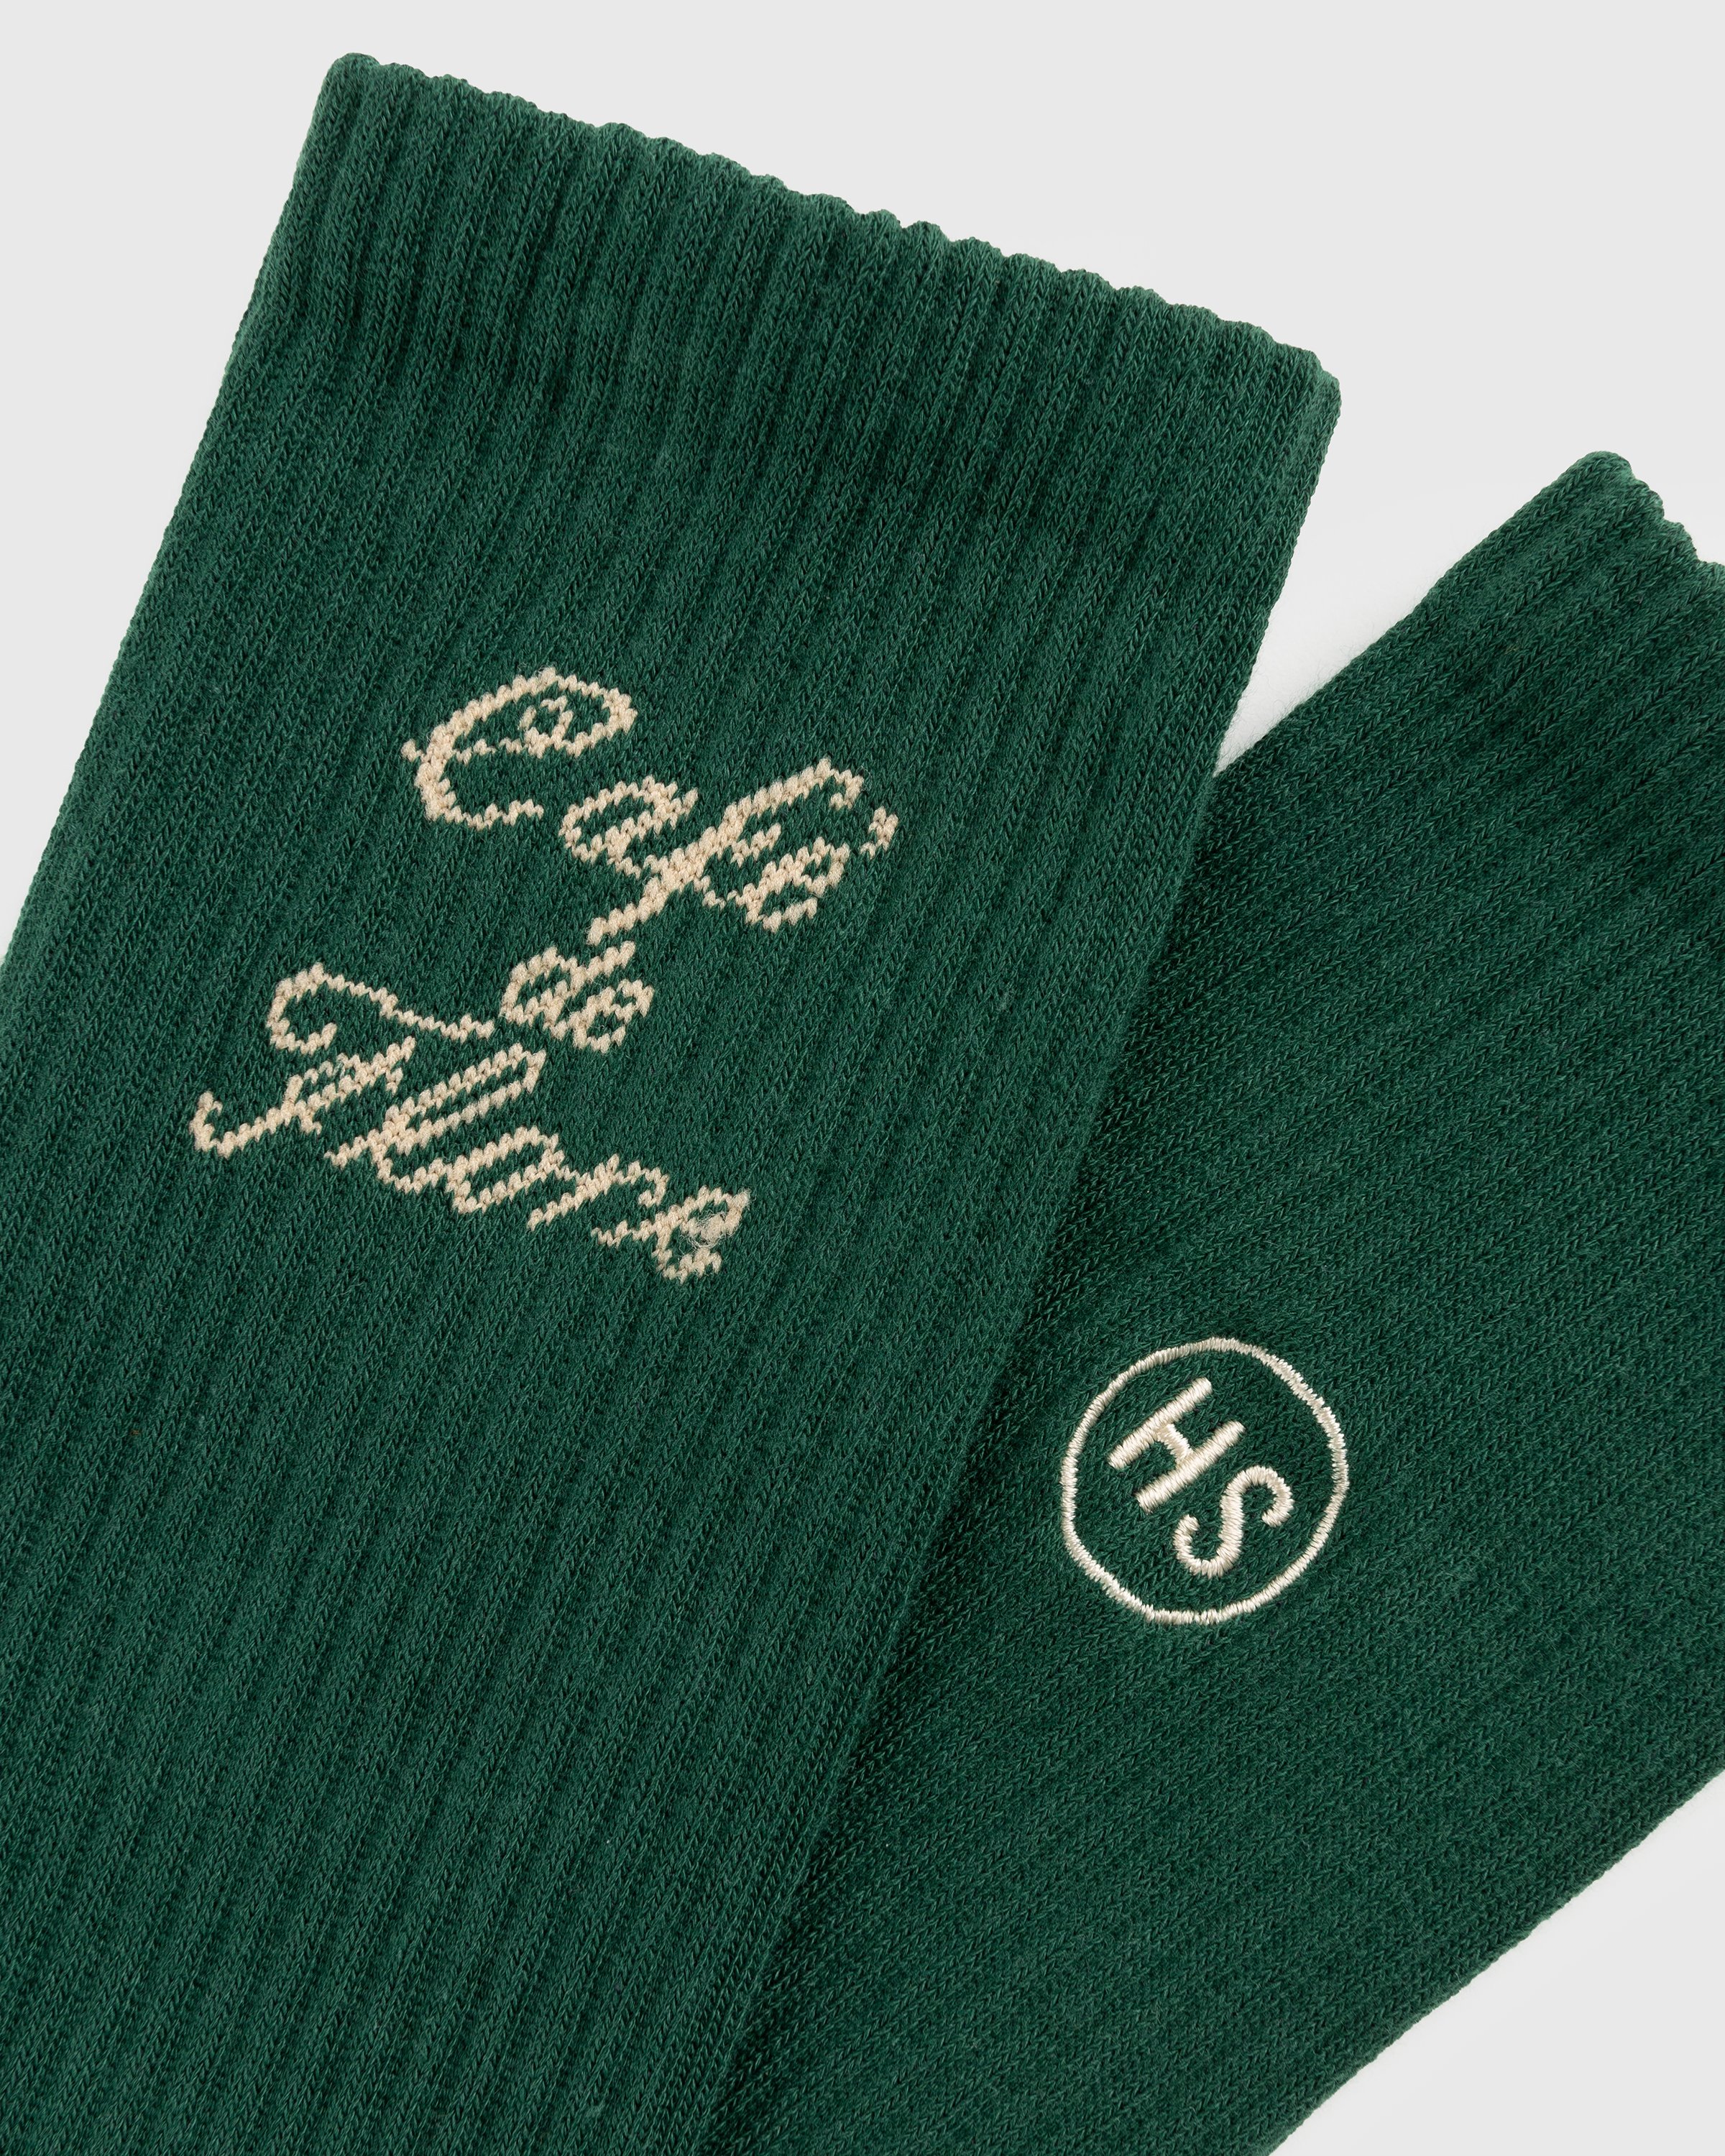 Café de Flore x Highsnobiety - Not In Paris 4 Socks Green - Accessories - Green - Image 3